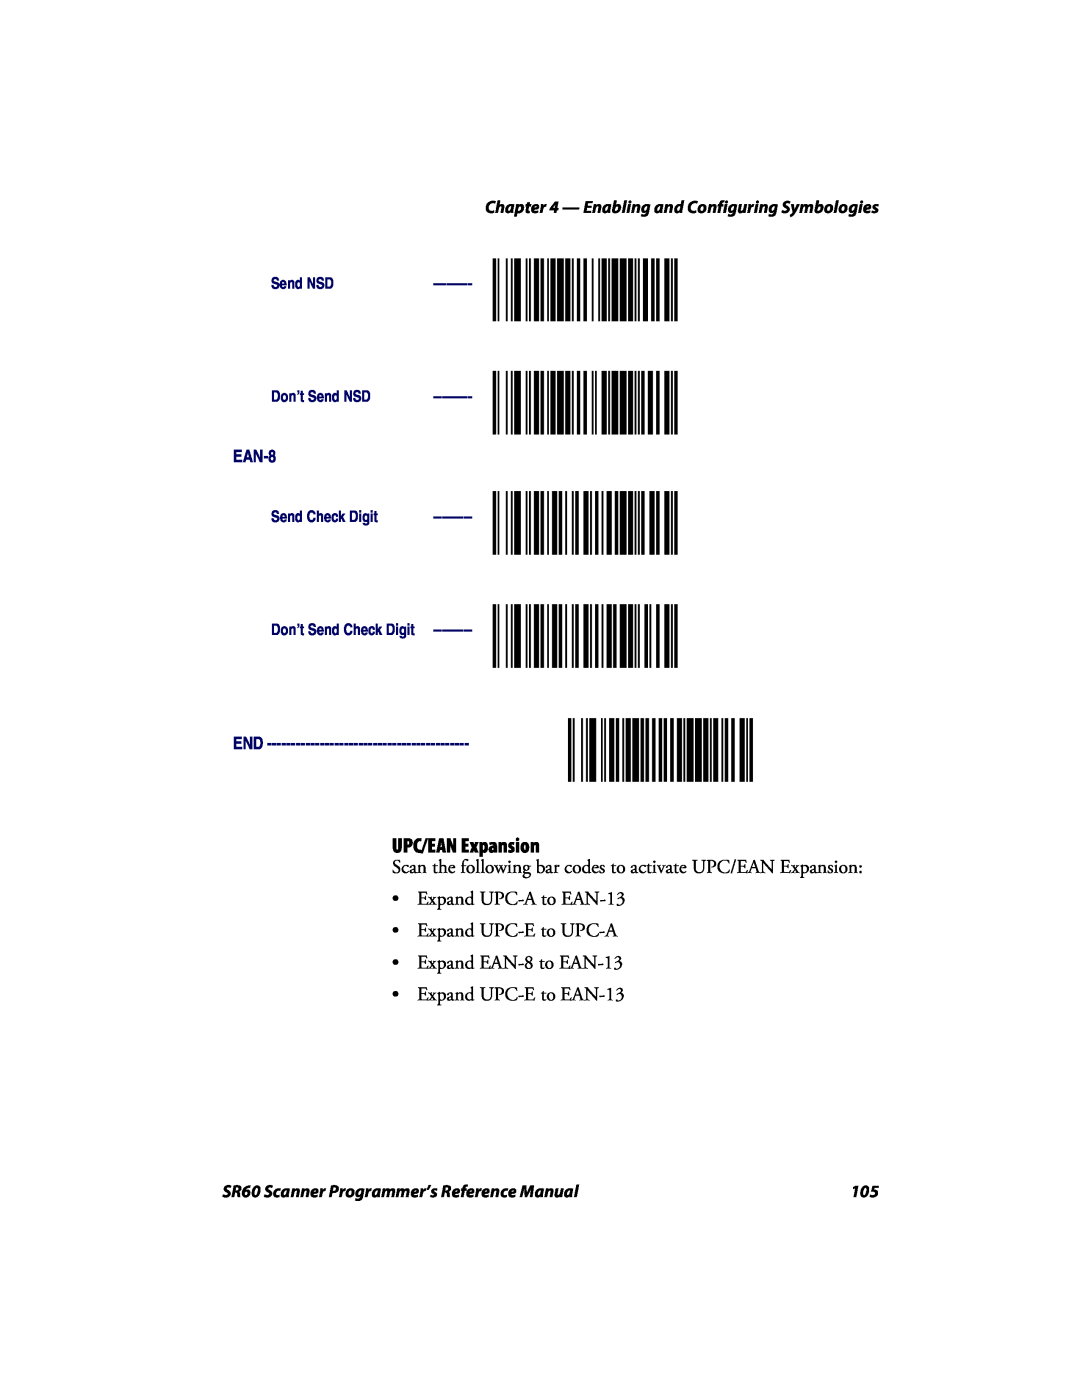 Intermec UPC/EAN Expansion, Enabling and Configuring Symbologies, EAN-8, SR60 Scanner Programmer’s Reference Manual 